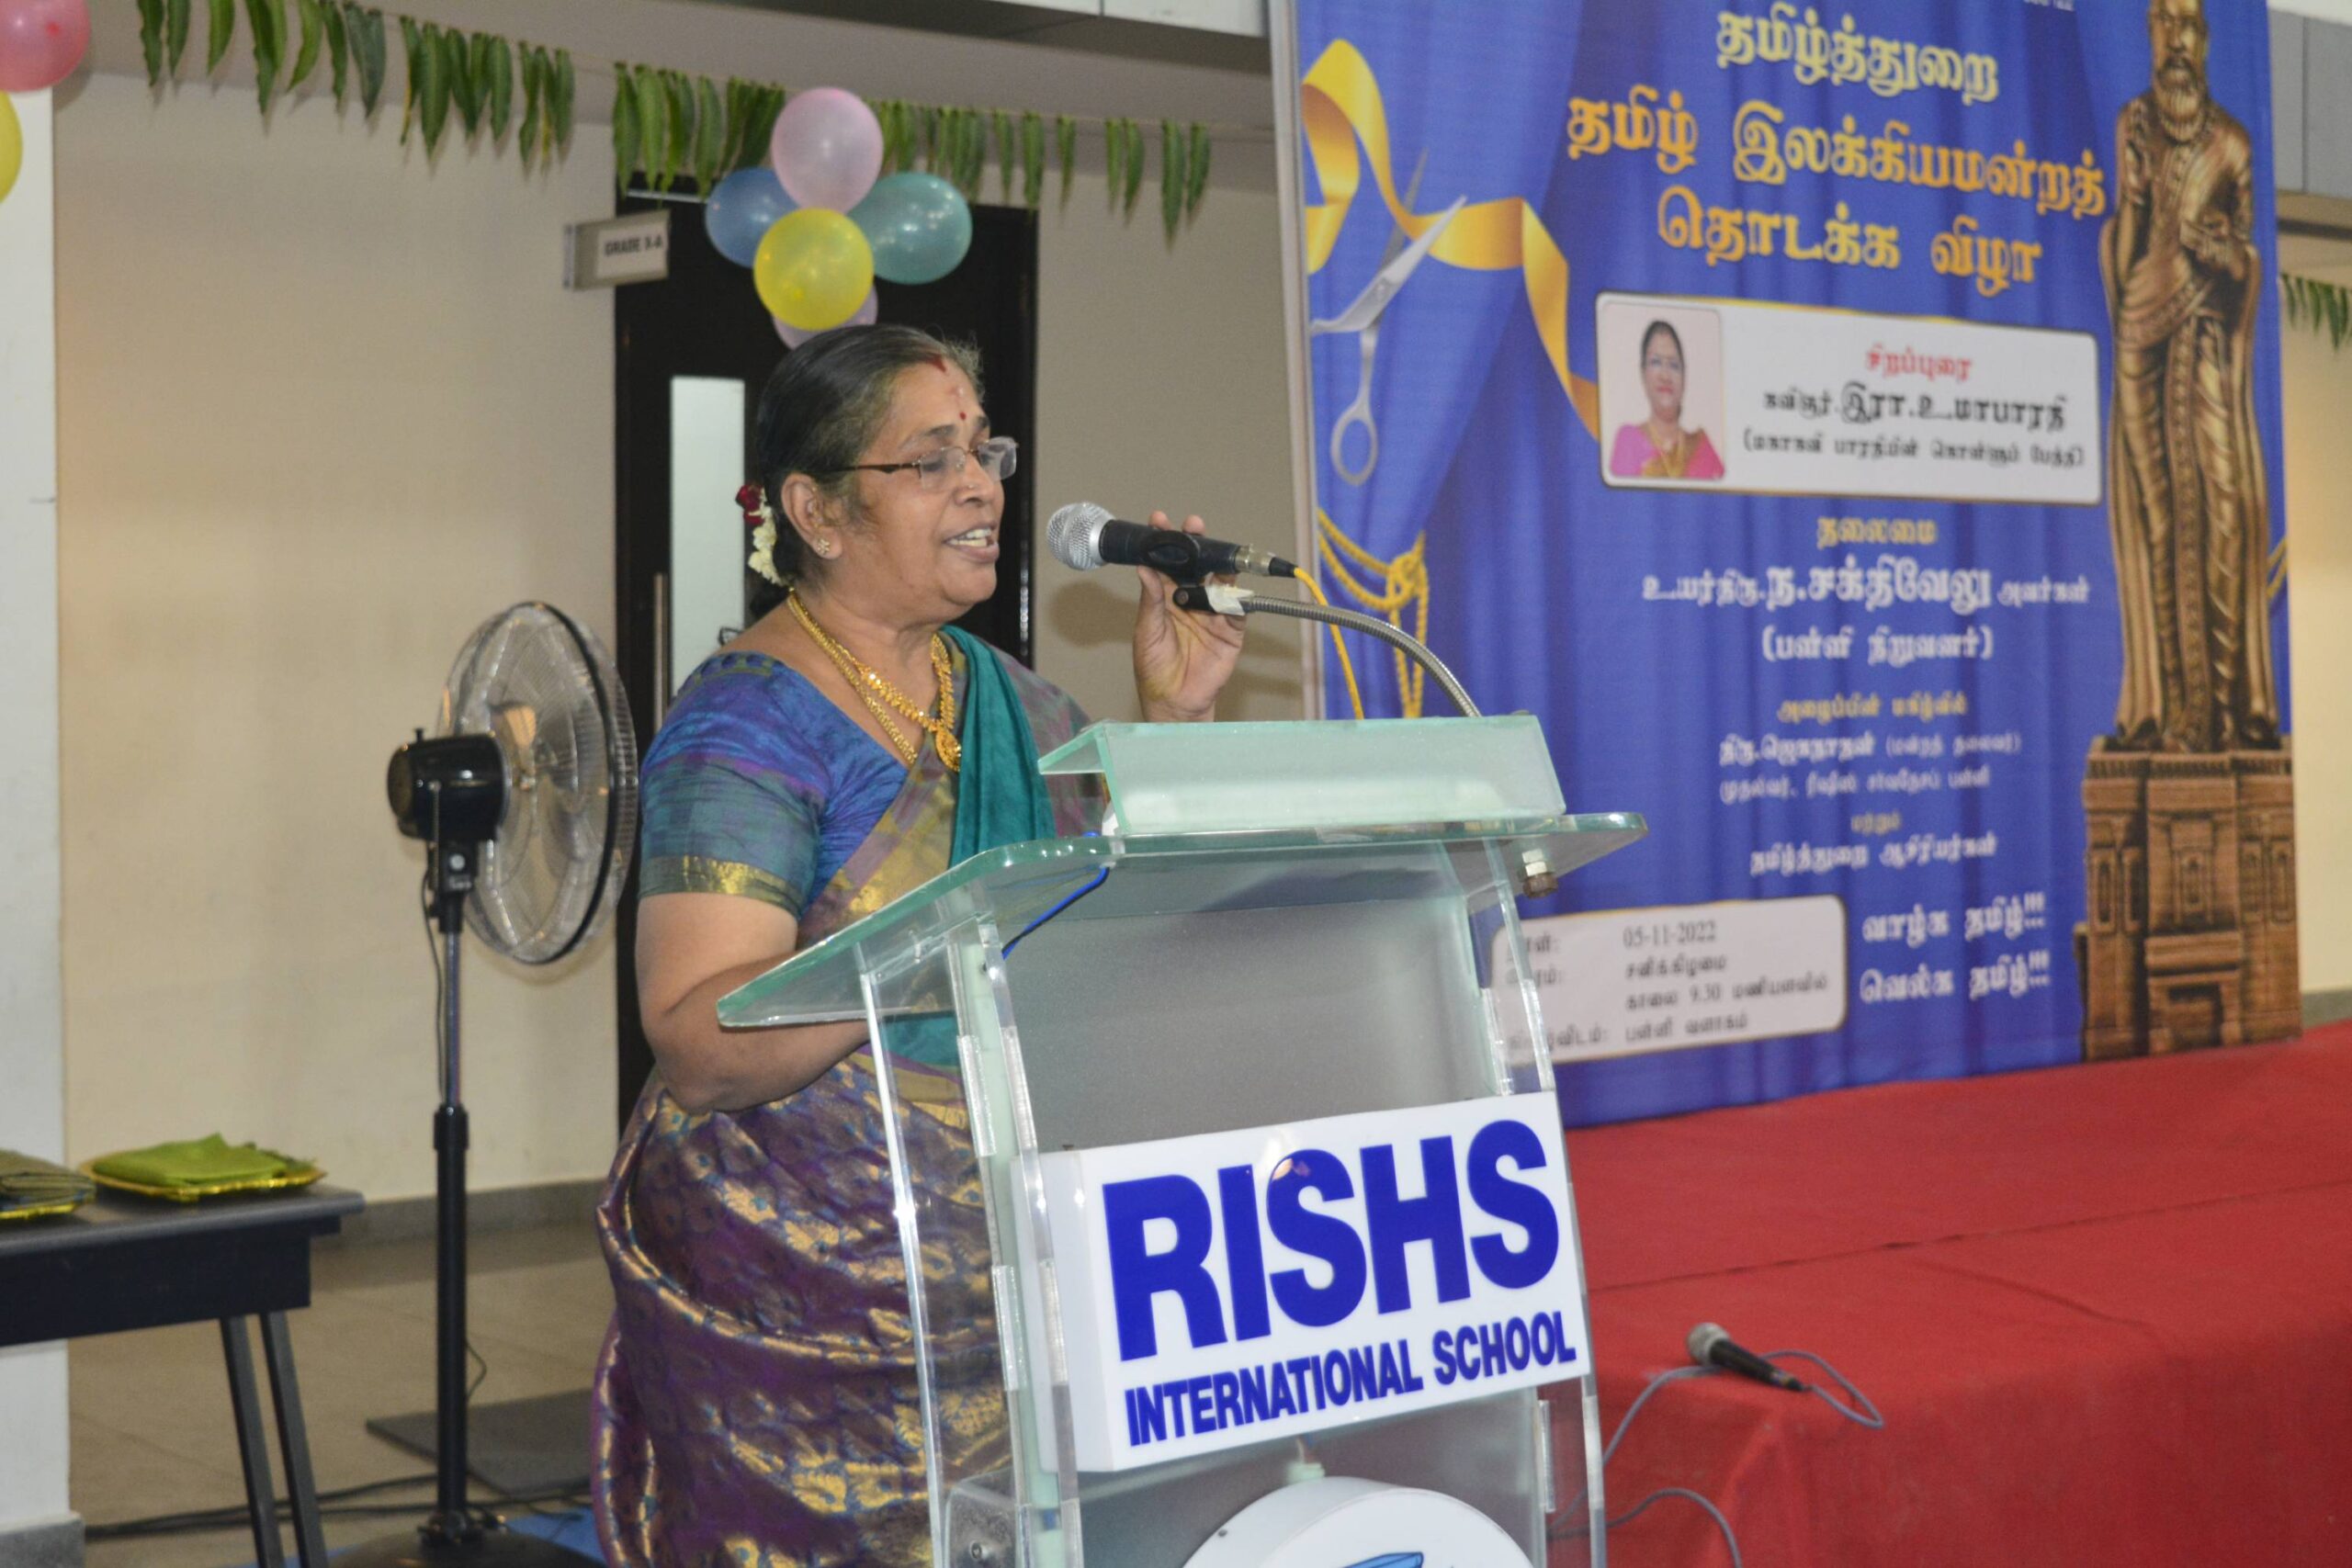 Welcome Speech by Teacher - Thamizh Mandram Function, RISHS International School, Chennai